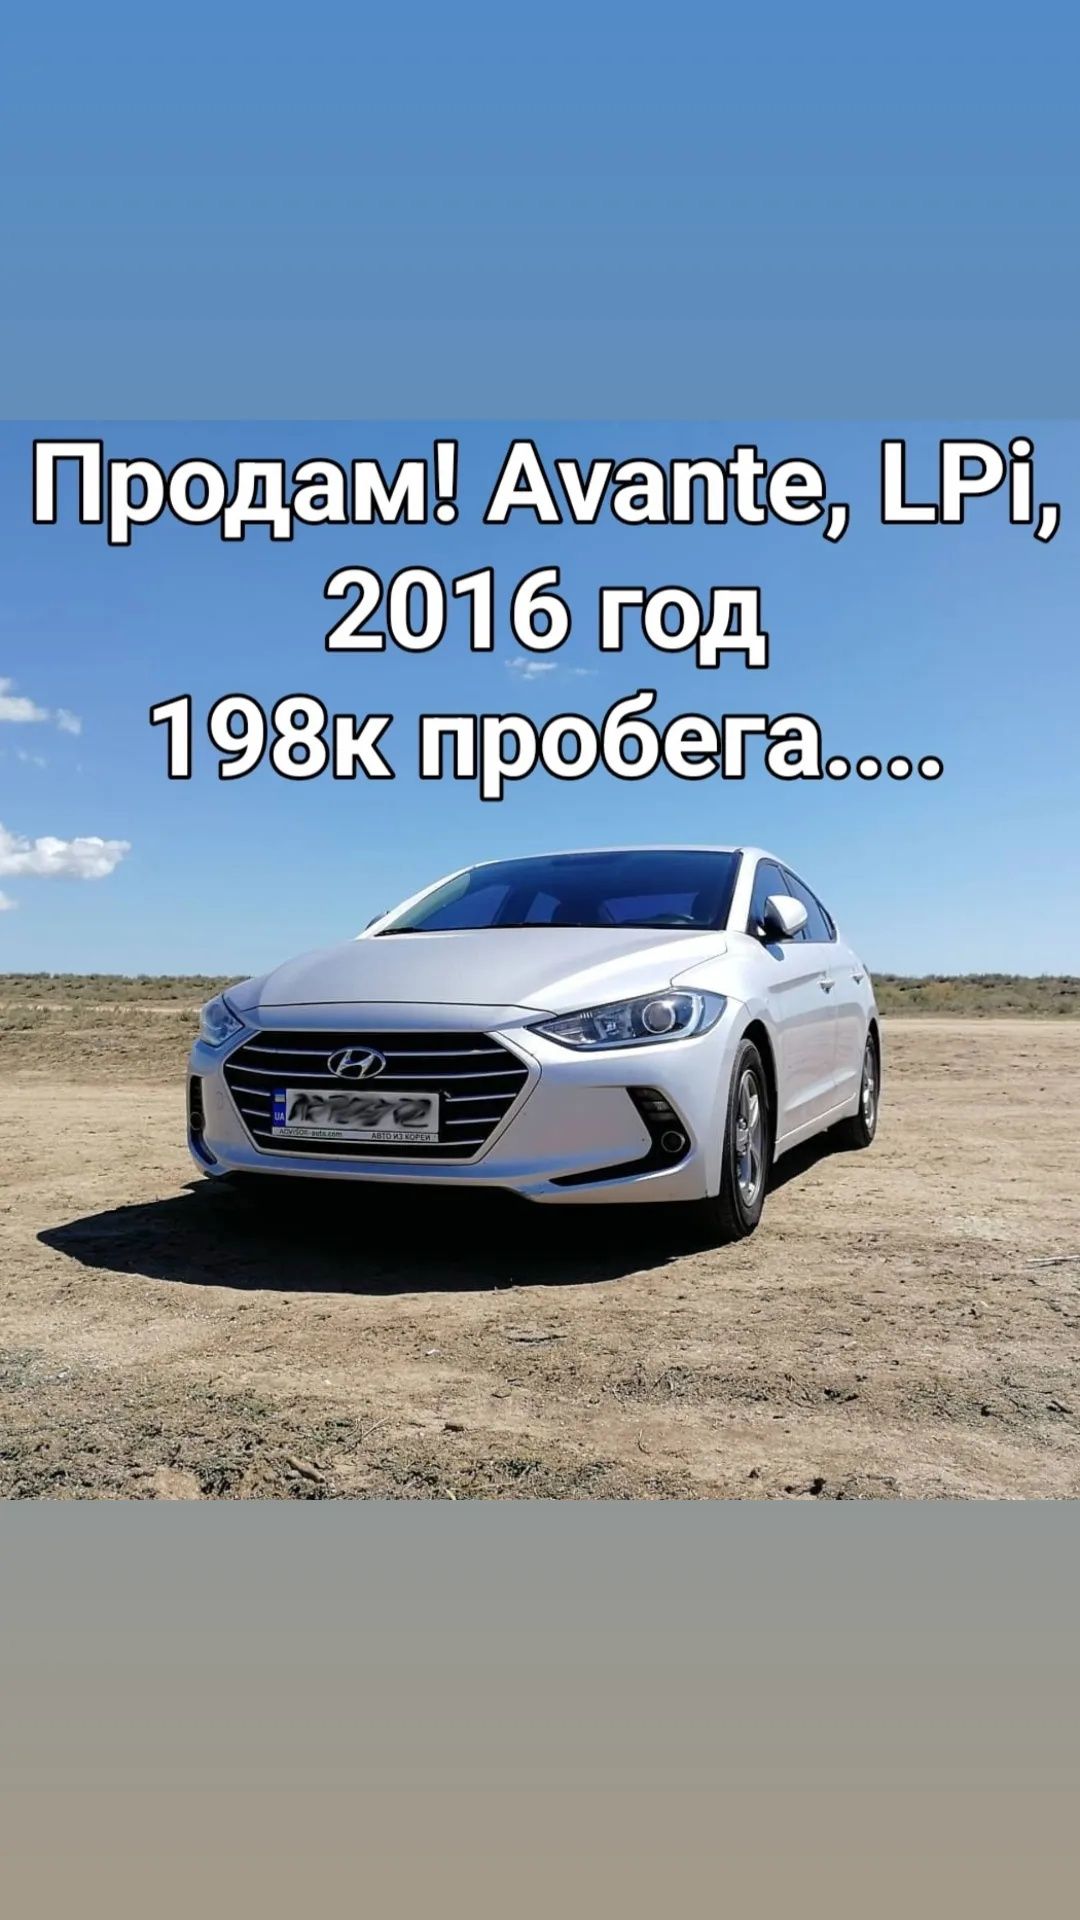 Продам газовую Hyundai avante (elantra) 2016 год